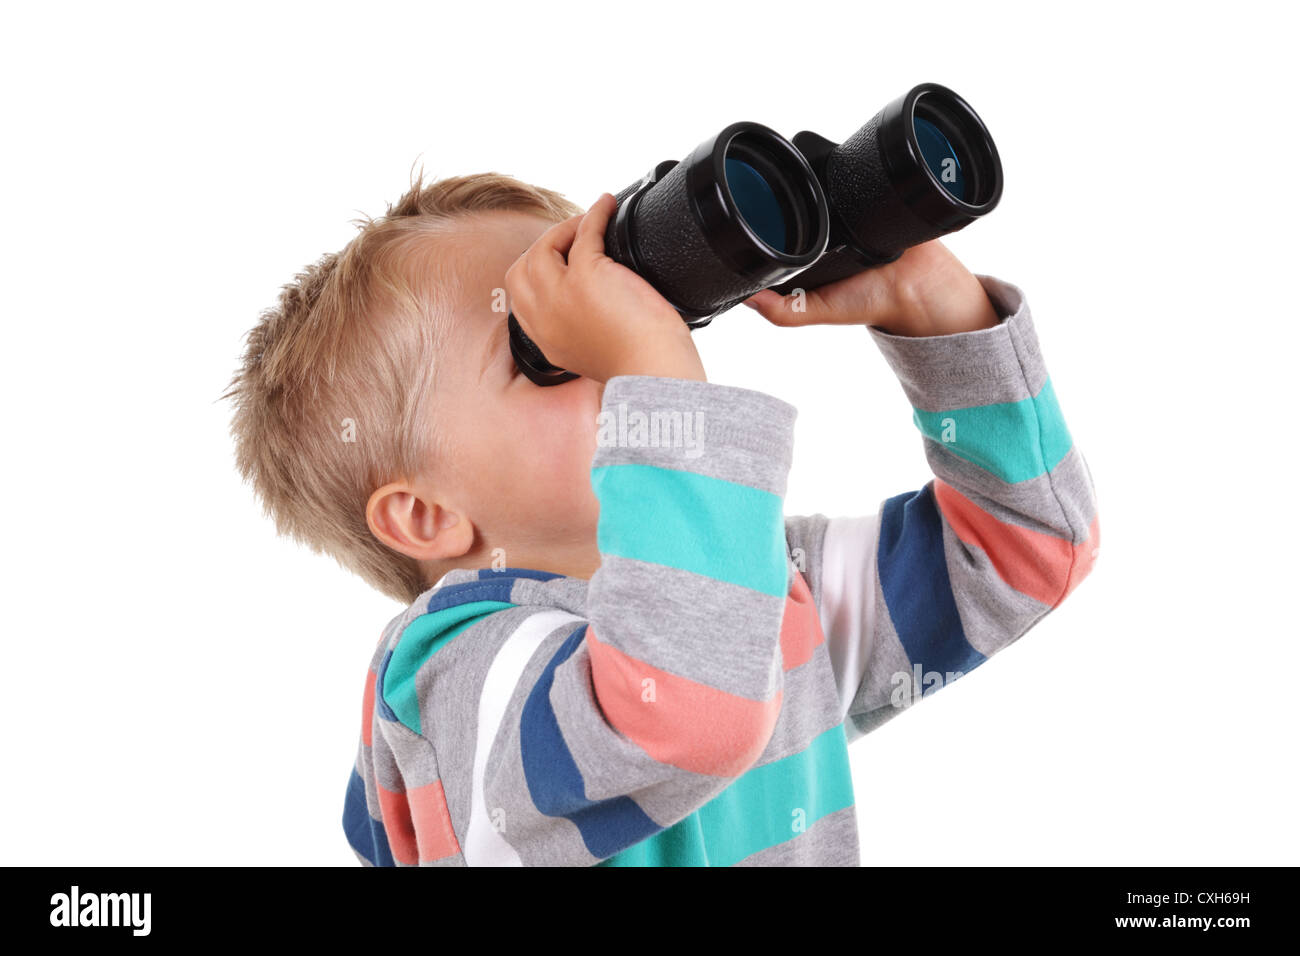 Looking through binoculars Stock Photo